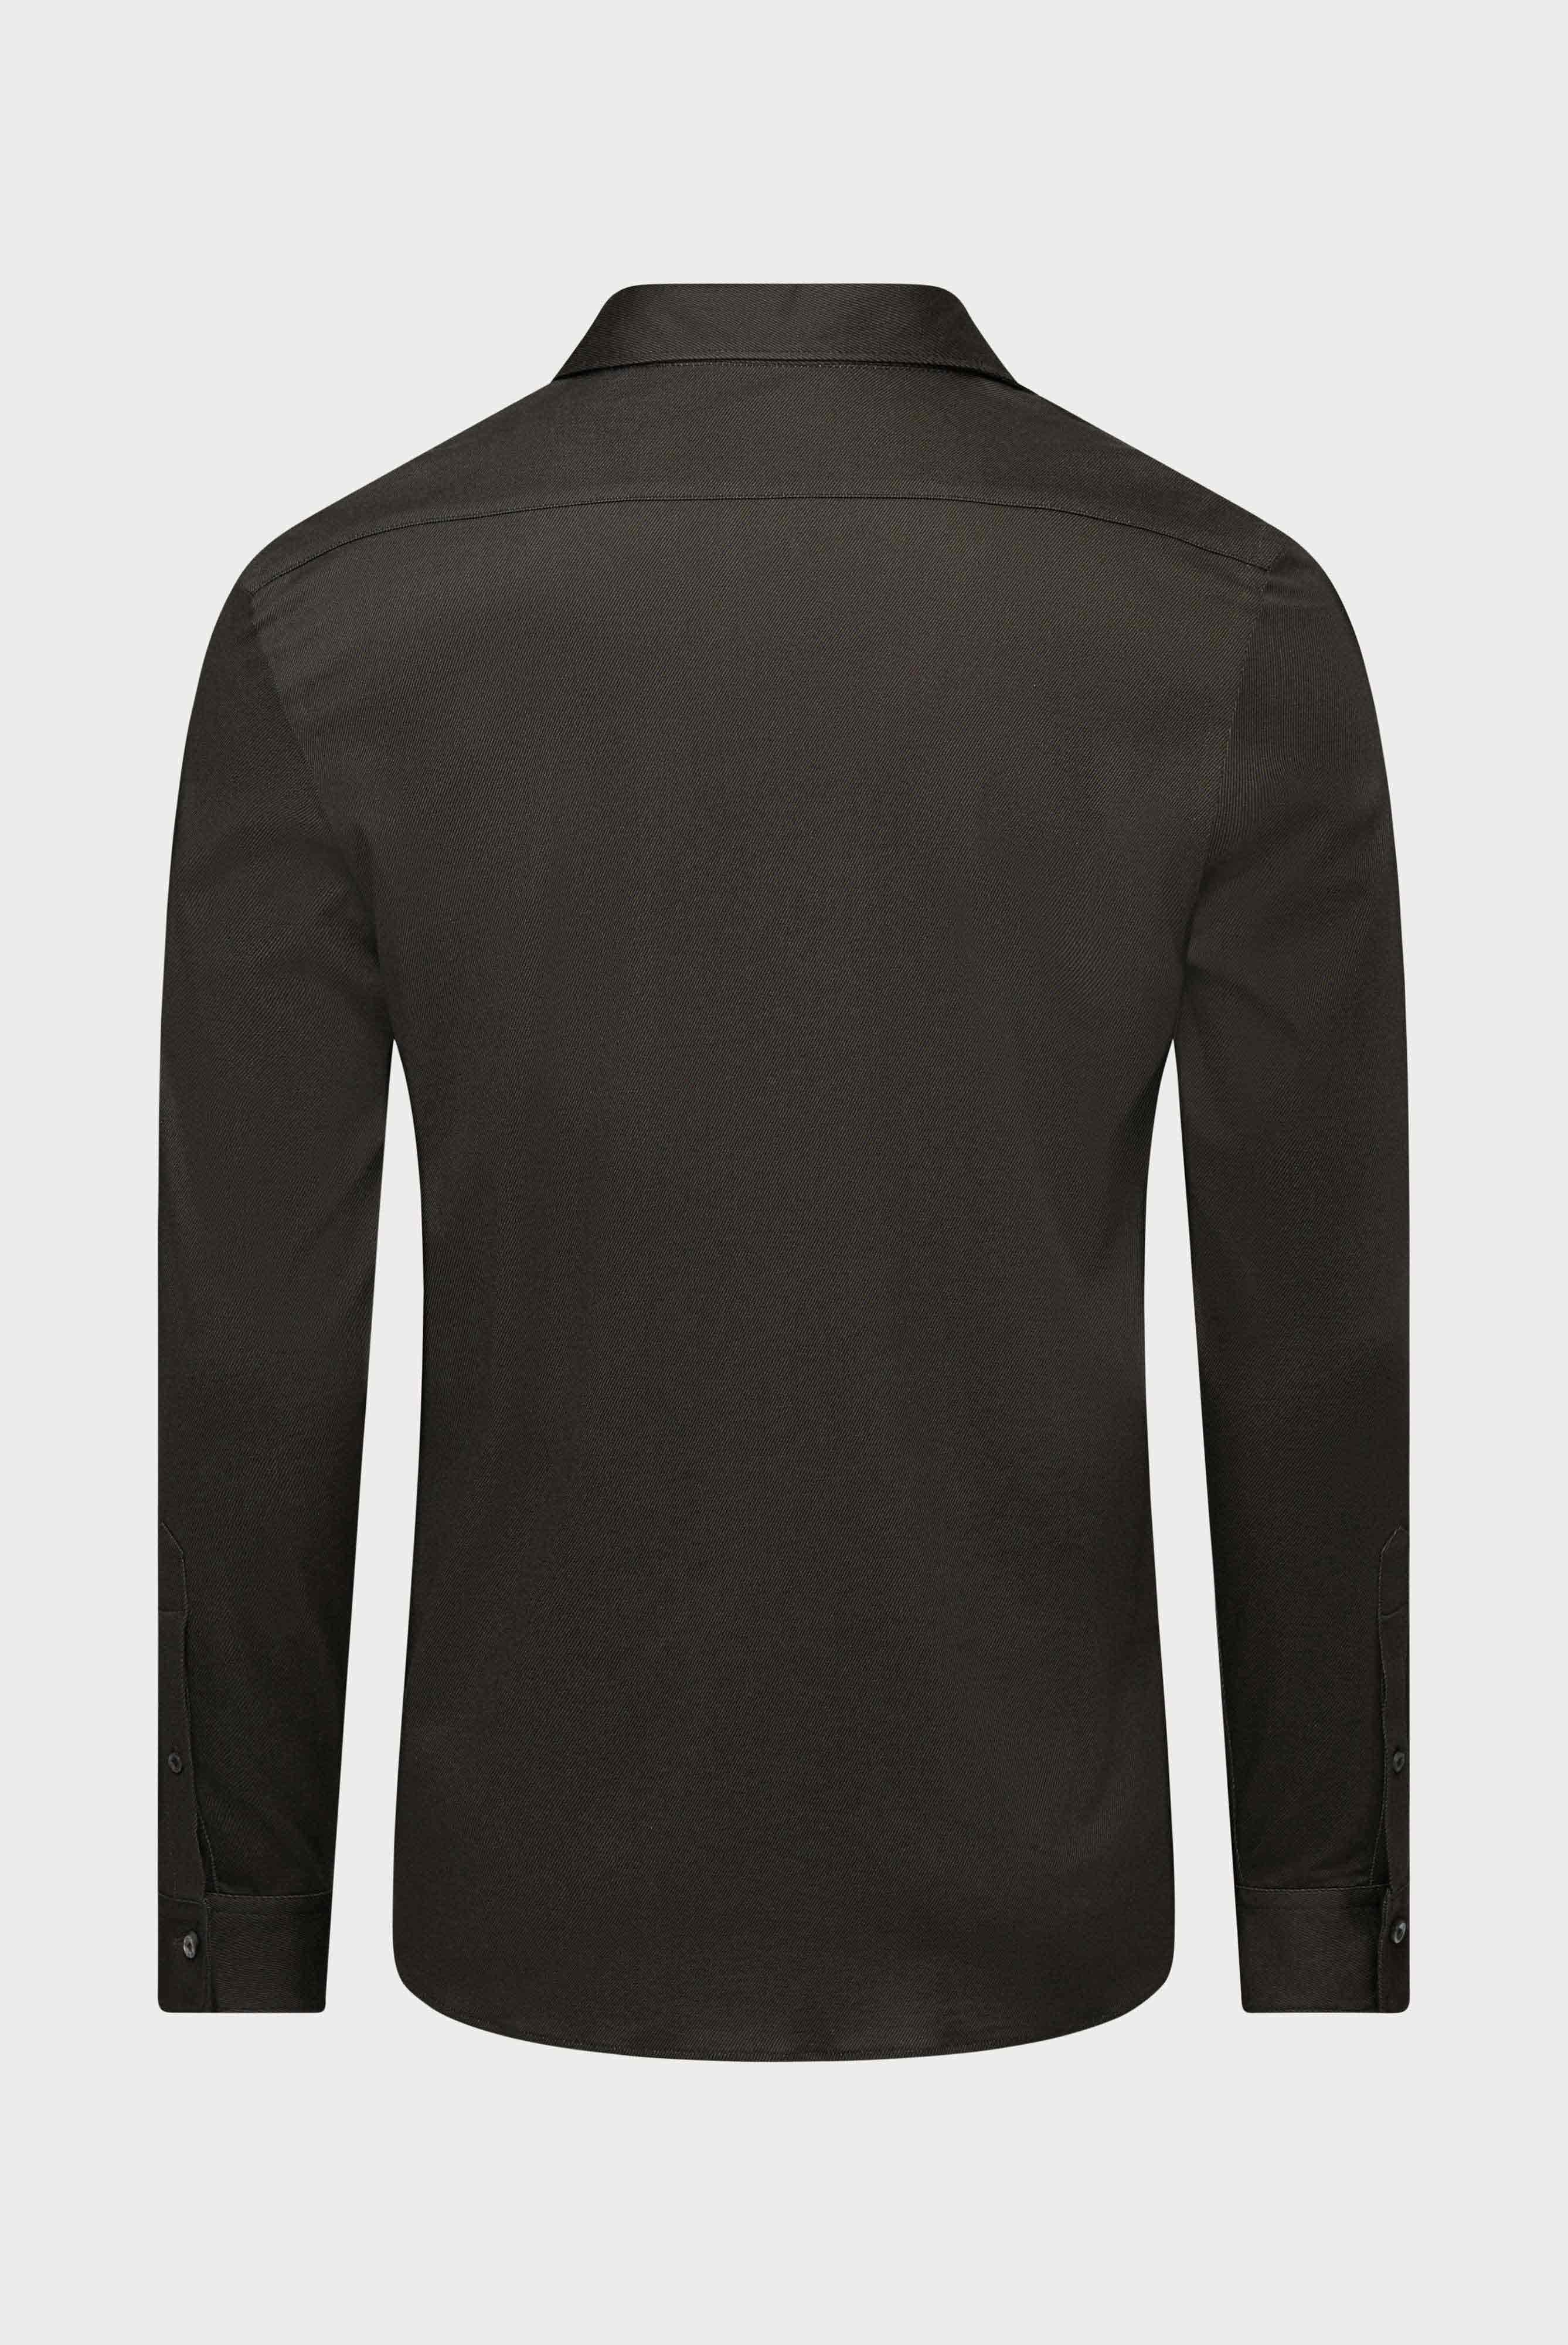 Casual Hemden+Jersey Hemd mit Twill Druck Tailor Fit+20.1683.UC.187749.970.XL